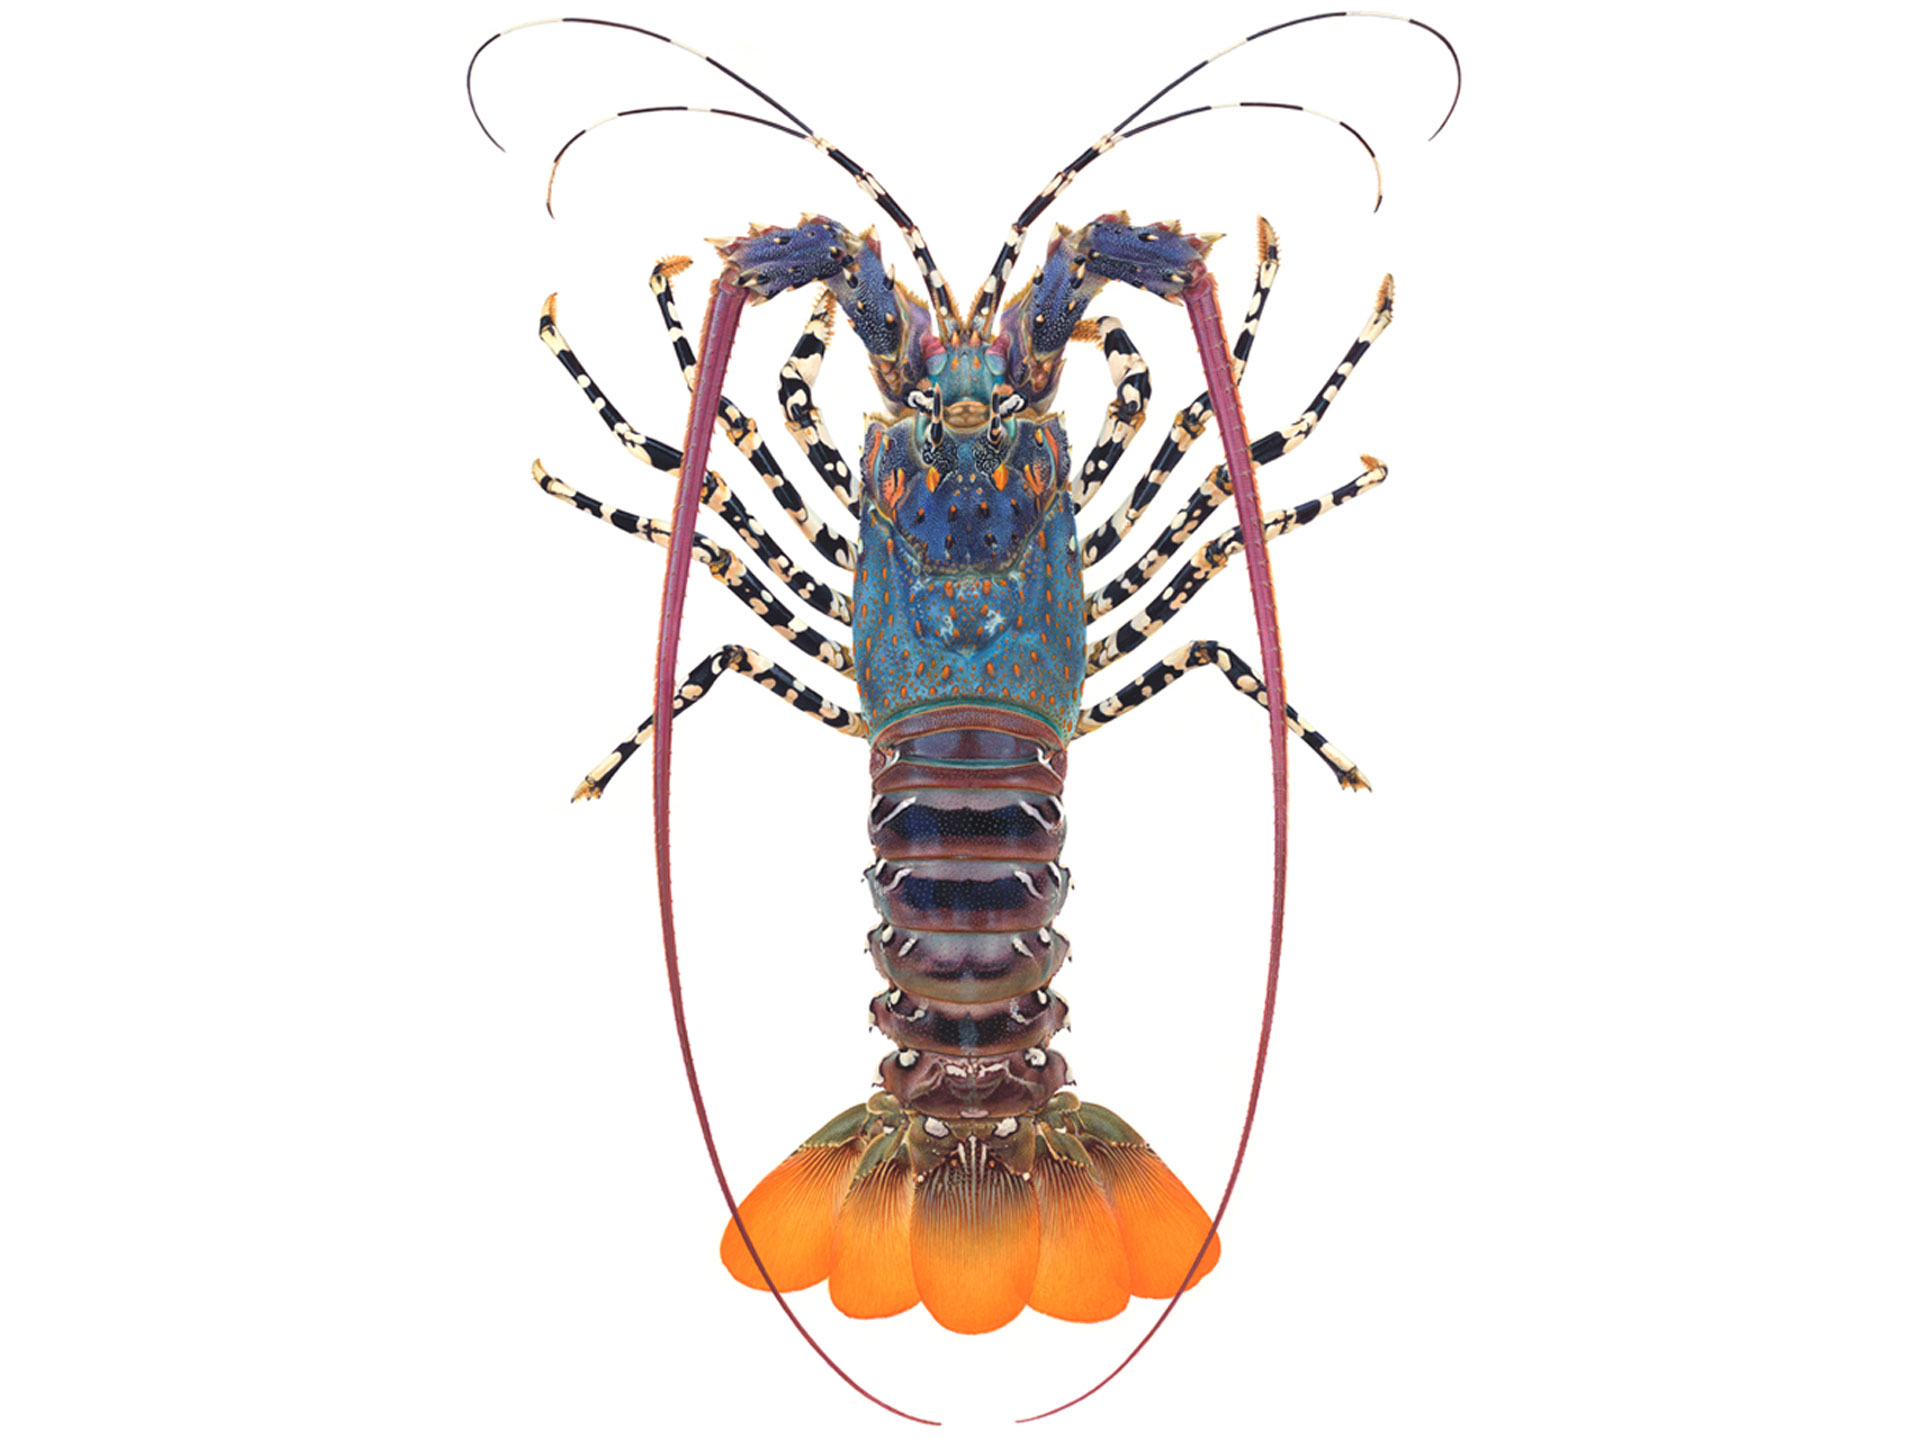 Ornate Rock Lobster ©Roger Swainston